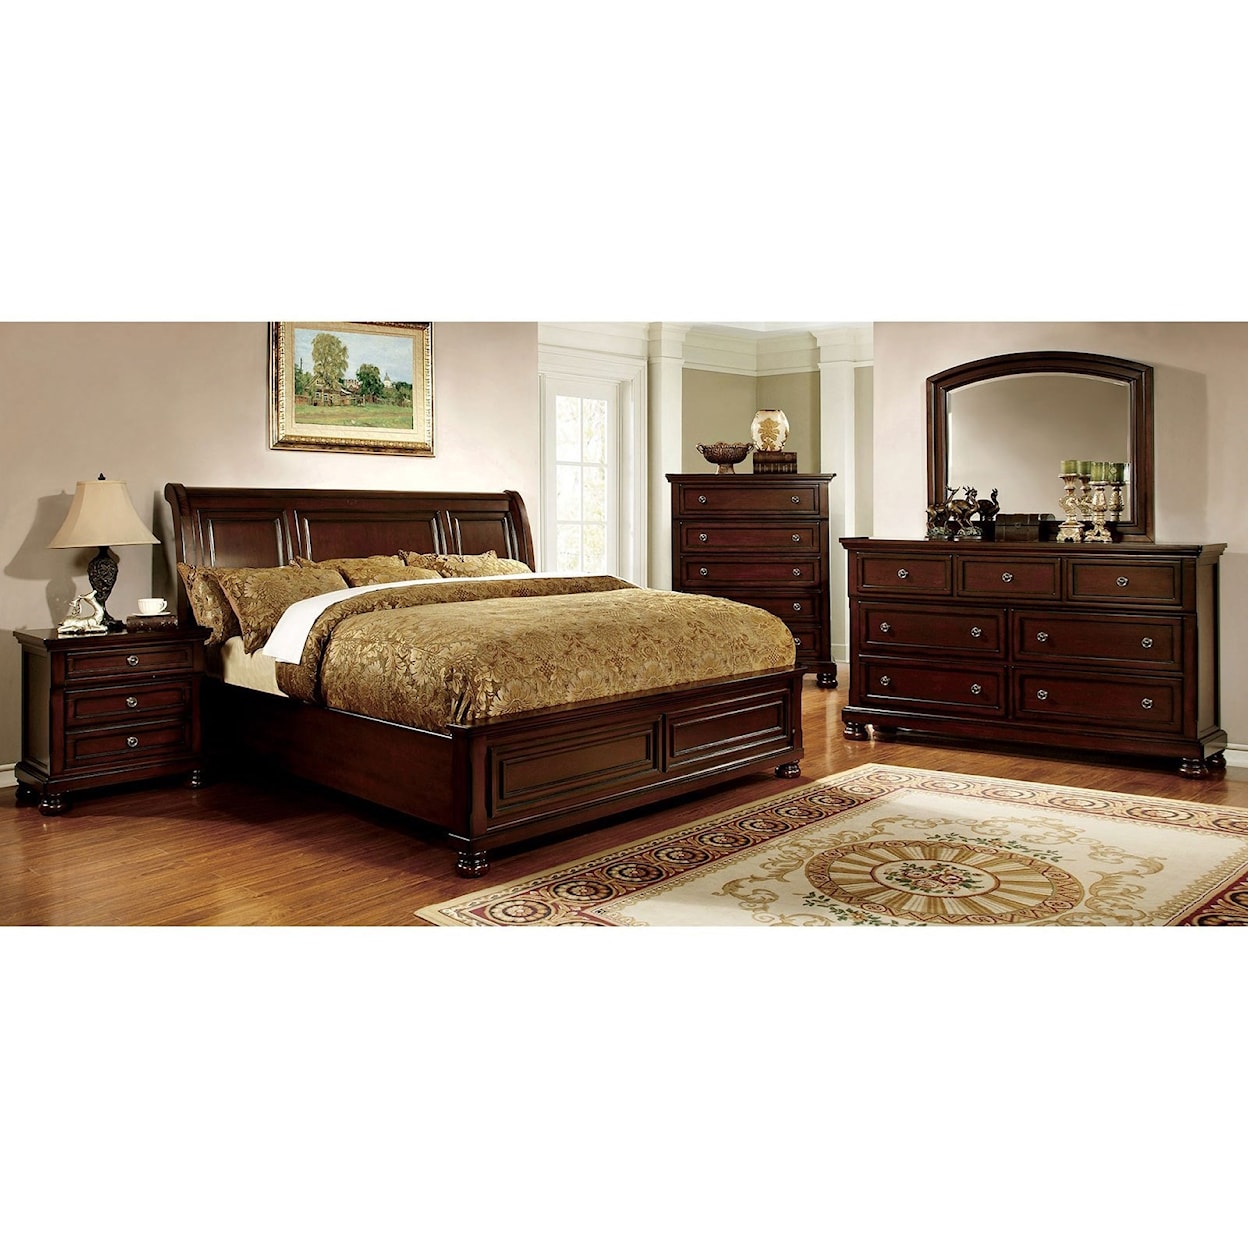 Furniture of America Northville Queen Bedroom Group